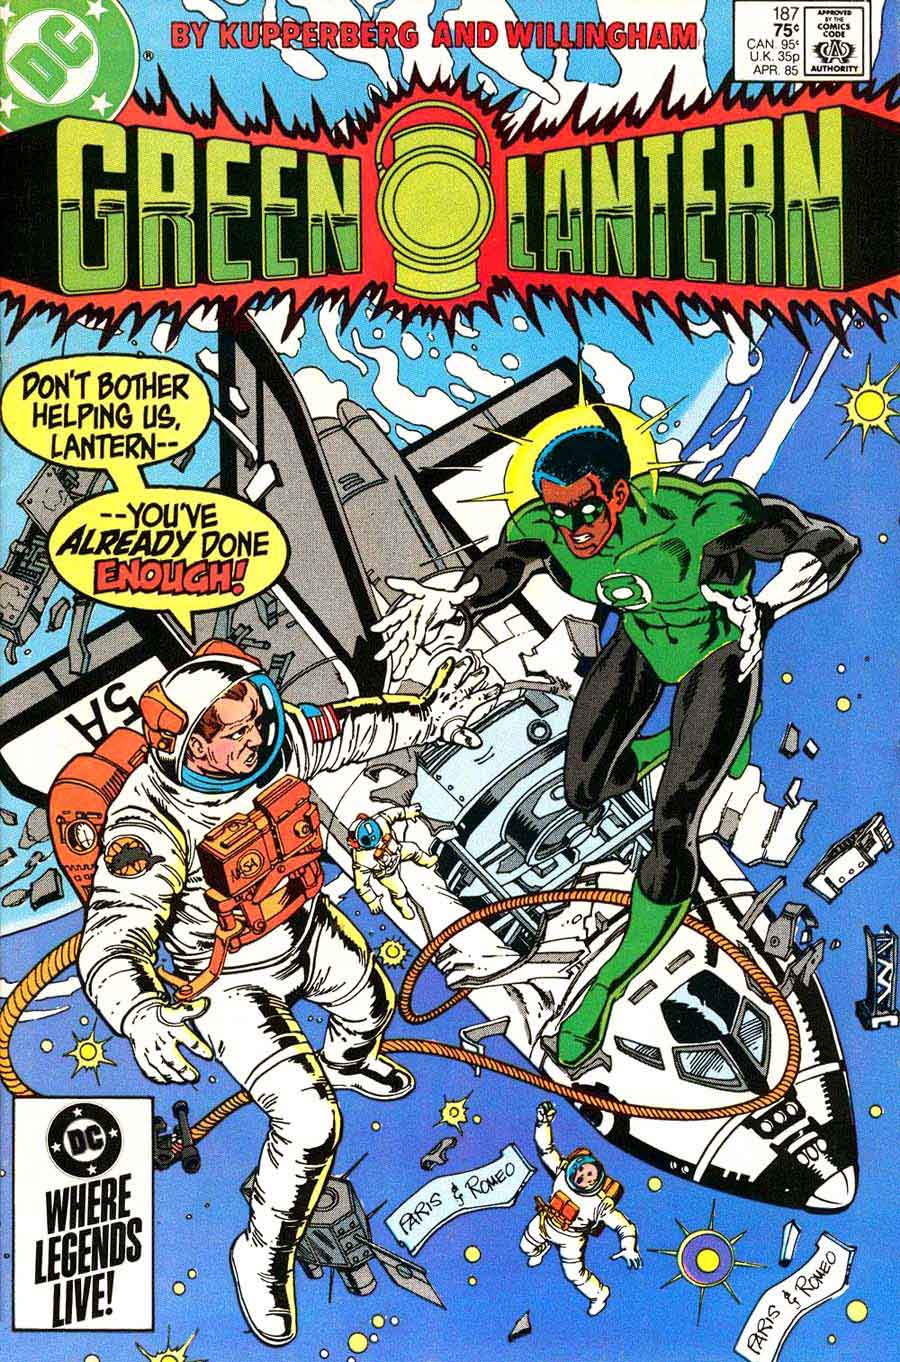 Green Lantern v2 #187 dc comic book cover art